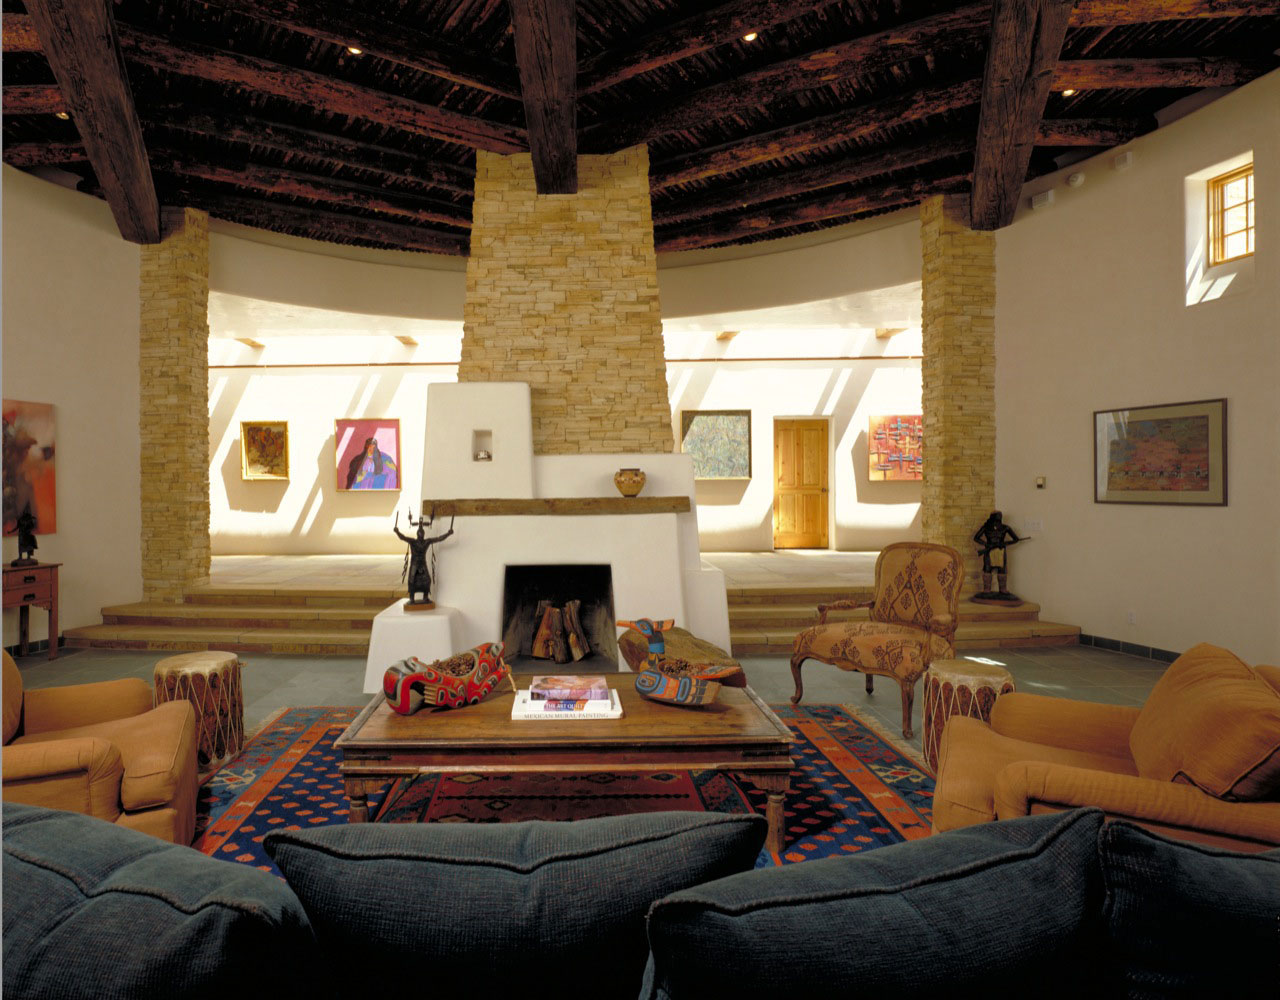 Southwestern Interior Design, Style And Decorating Ideas (7)